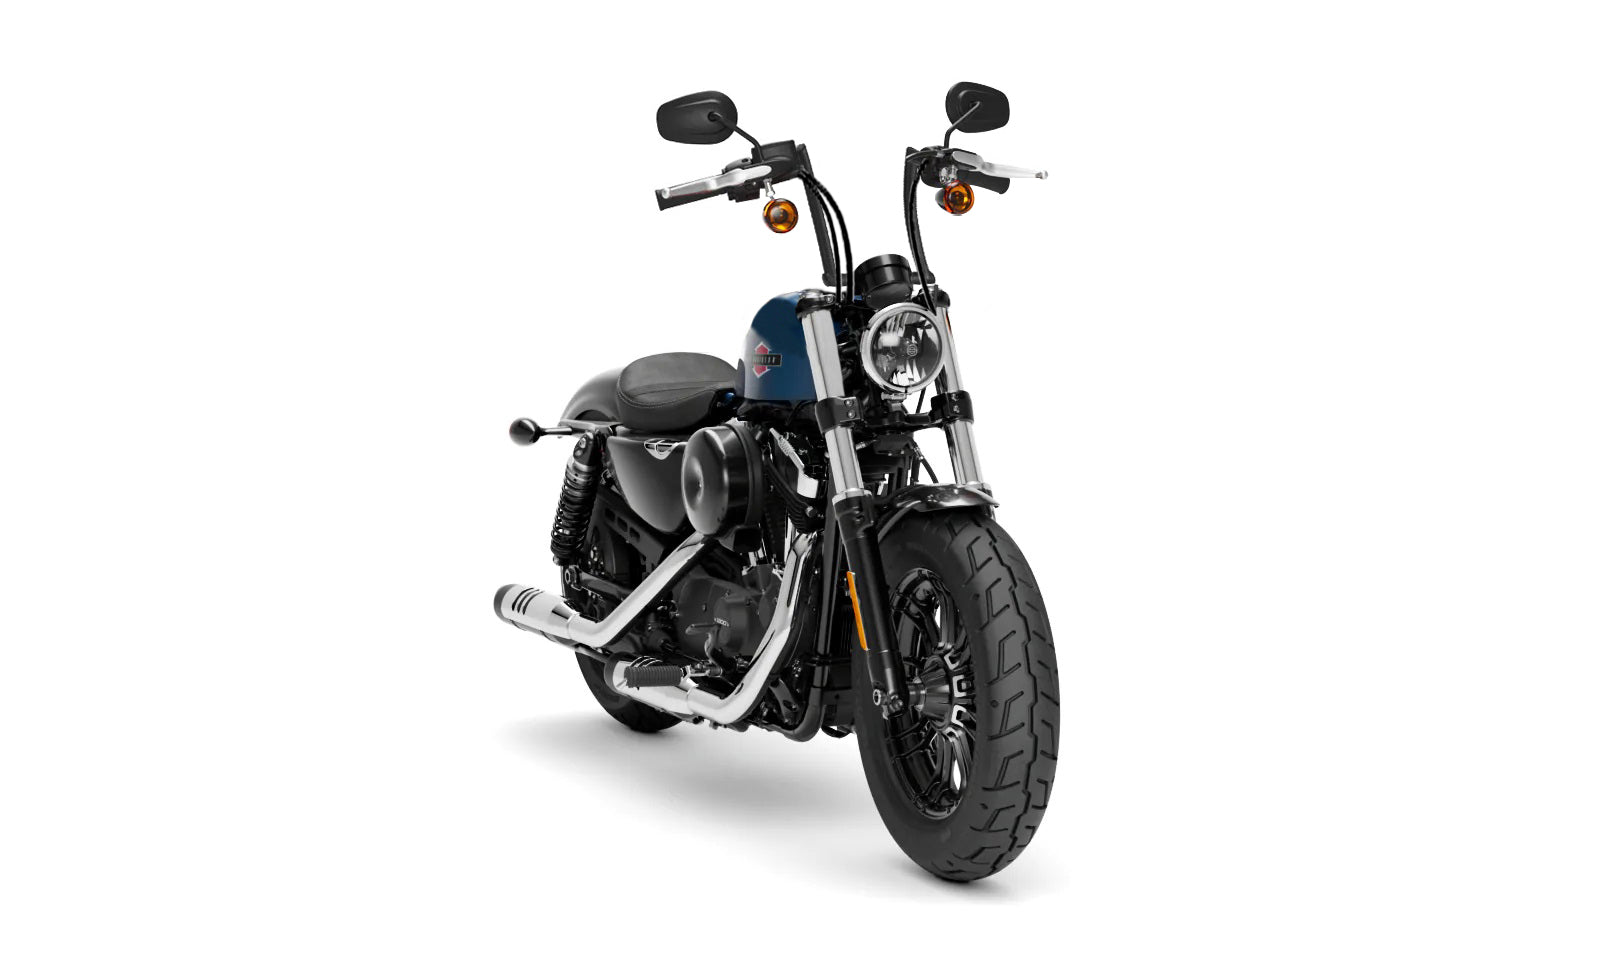 Viking Iron Born 9" Handlebar for Harley Sportster Forty Eight Matte Black Bag on Bike View @expand